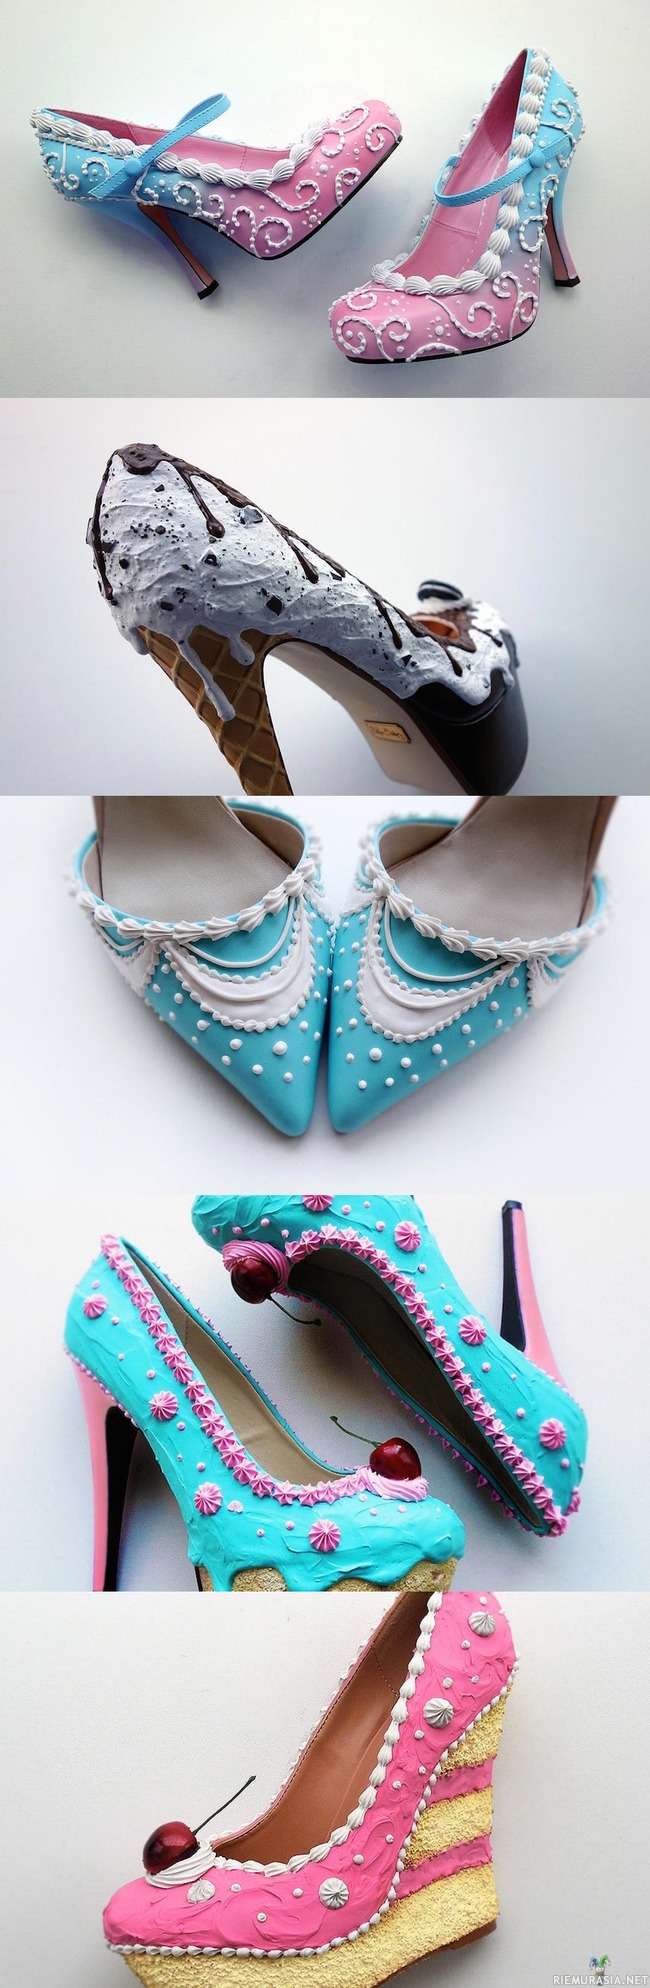 Herkullisen näköiset kengät - Shoe Bakery valmistaa herkullisen näköisiä kenkiä. Lisää löytyy sivuilta http://www.shoebakery.com/